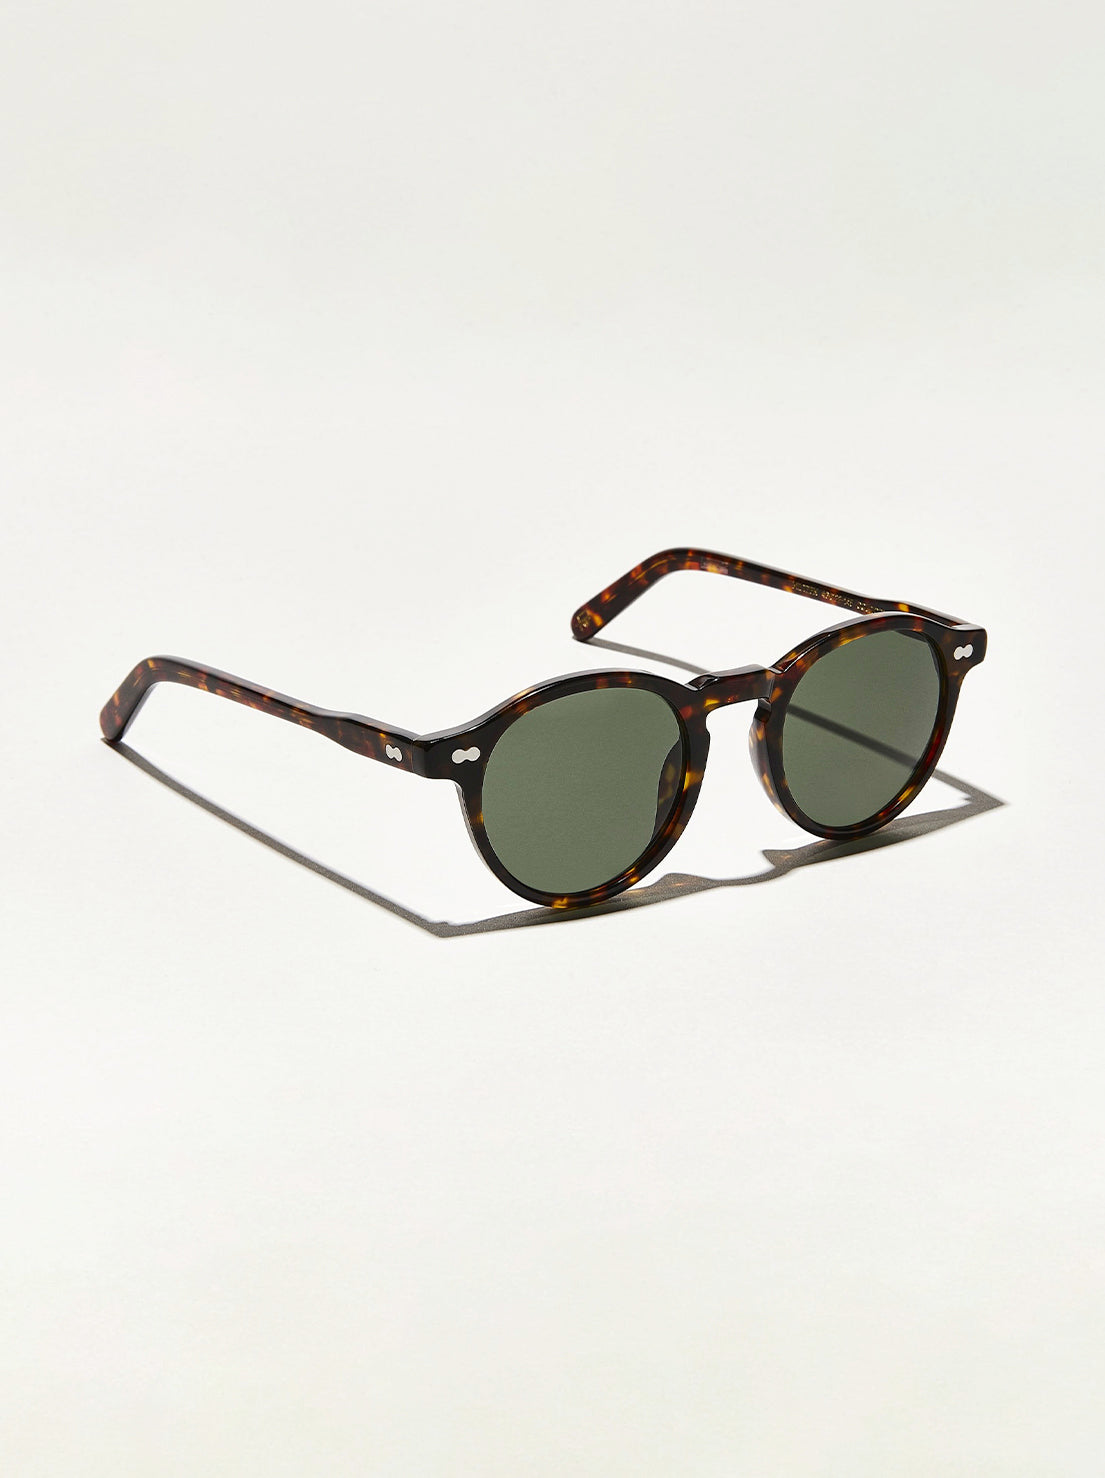 Moscot - Miltzen Sunglasses in Tortoise 46 (Reg) - G15 Lens